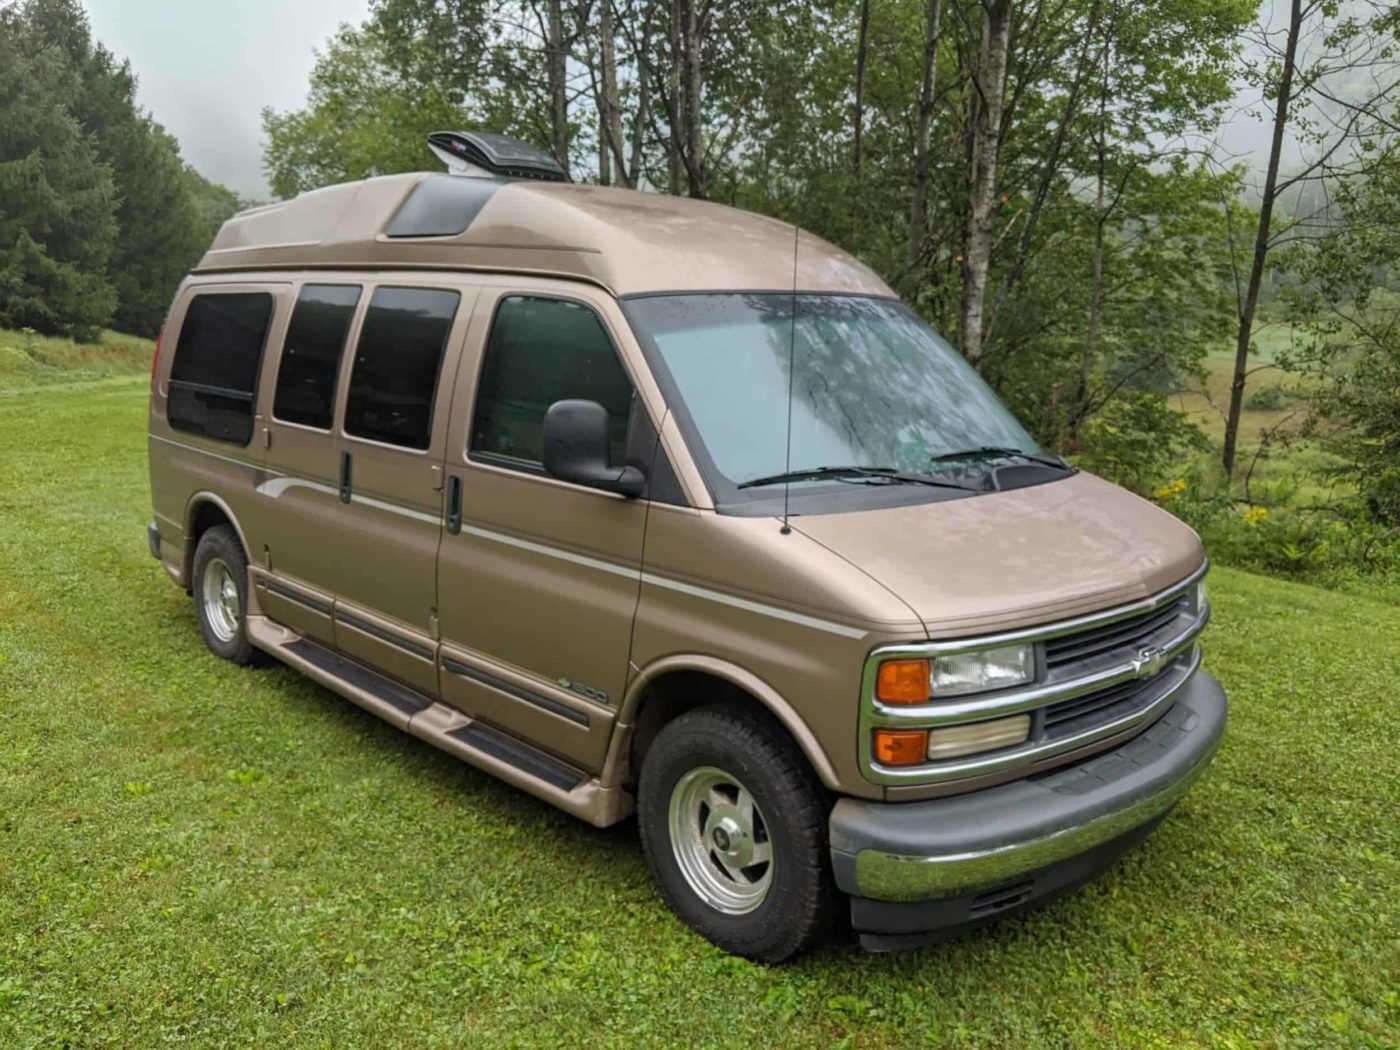 1997 Chevy Express Camper Van For Sale in Smoketown, Pennsylvania - Van  Viewer